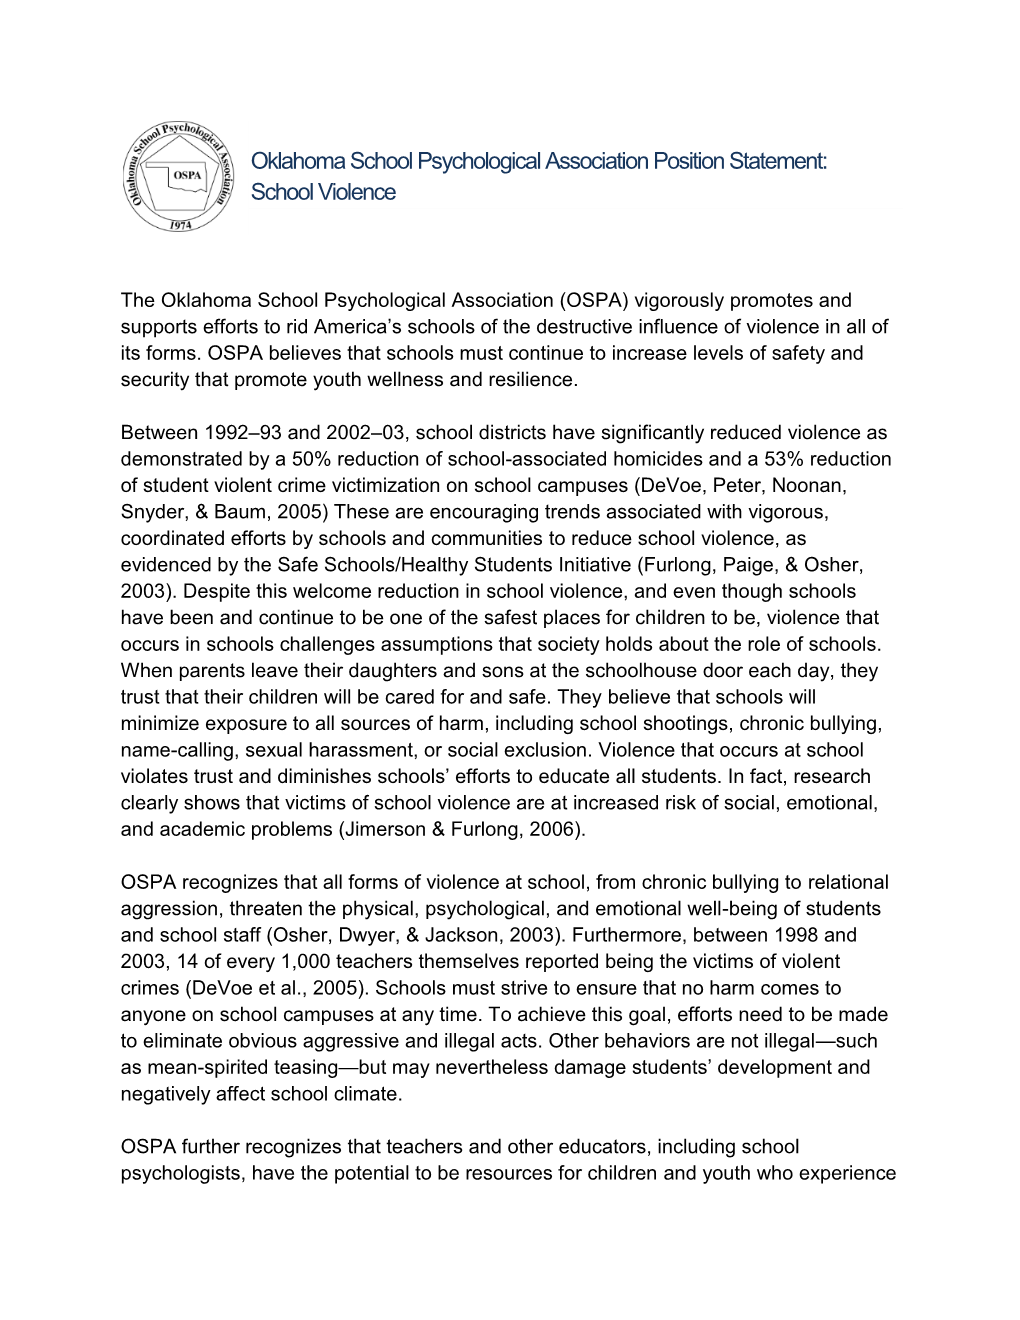 Oklahoma School Psychological Association Position Statement: School Violence